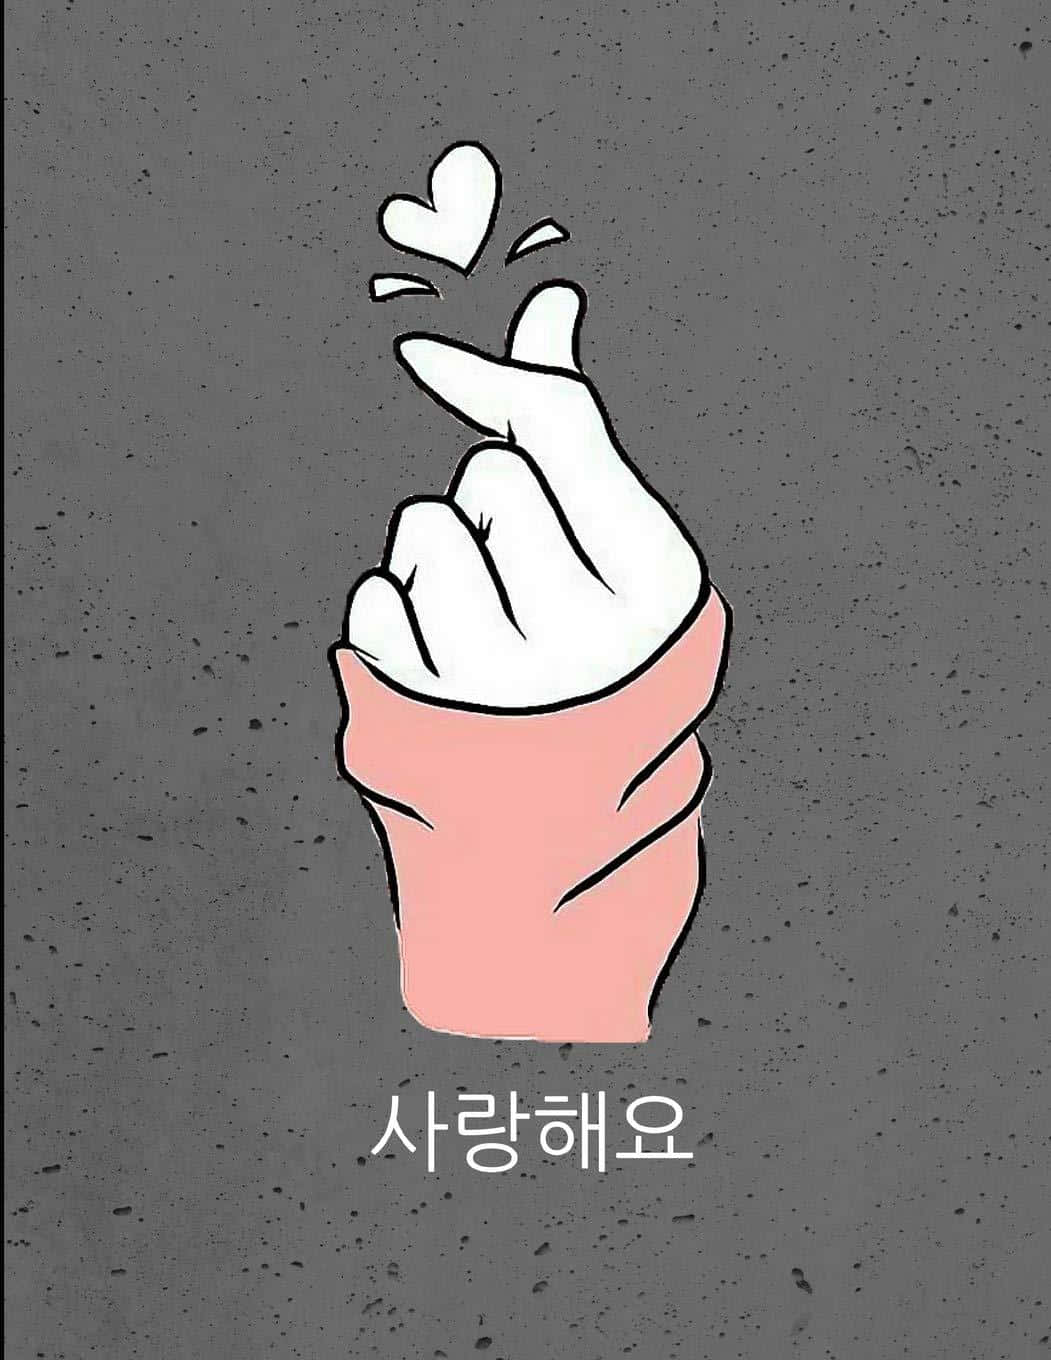 Btsfinger Heart Korean Saranghaeyo Can Be Translated To 